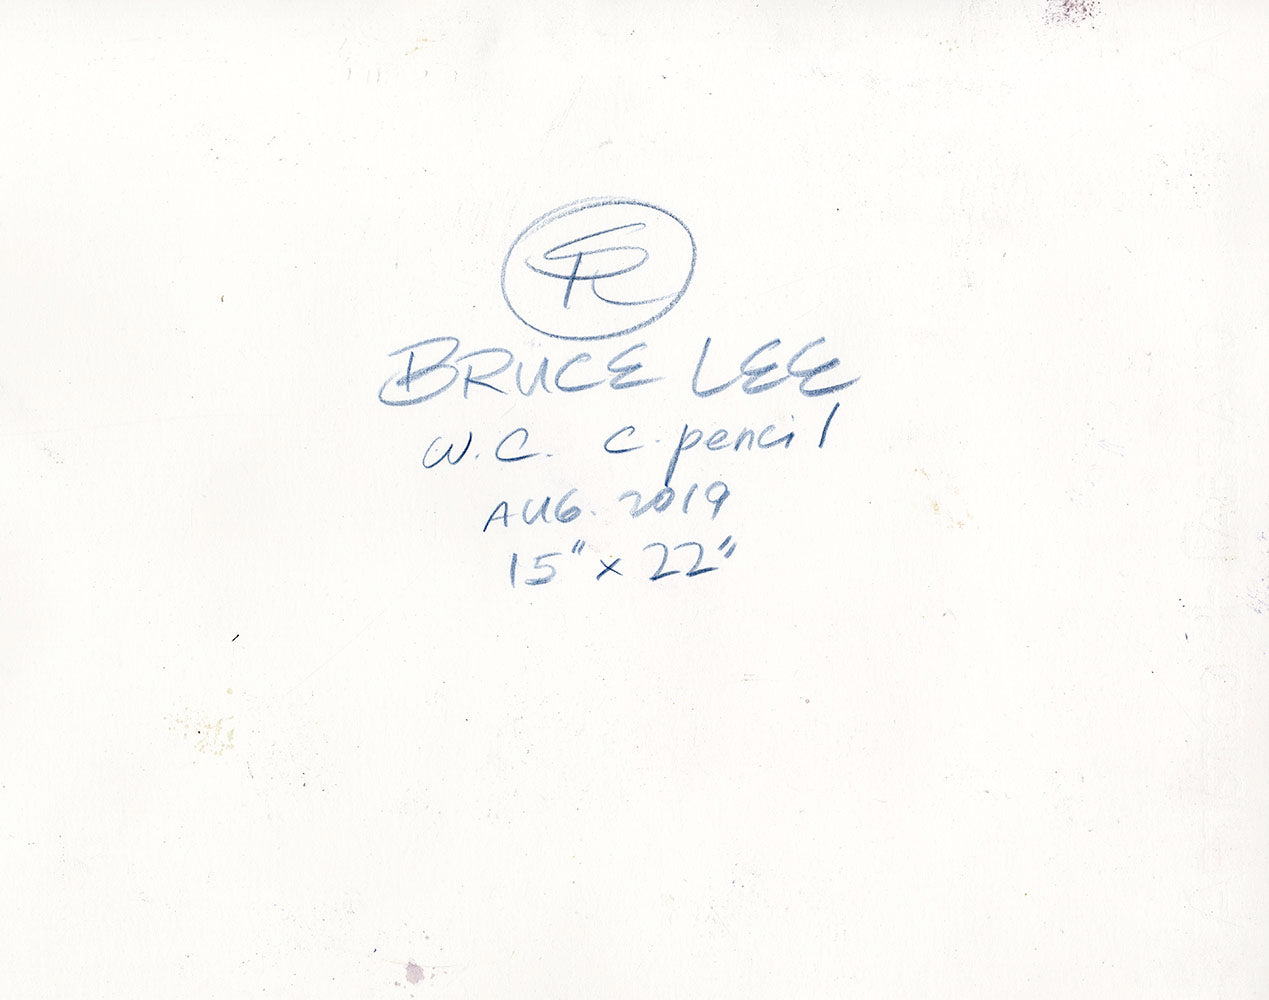 Bruce Lee Watercolor/Colored Pencil April 2019 Study (2)